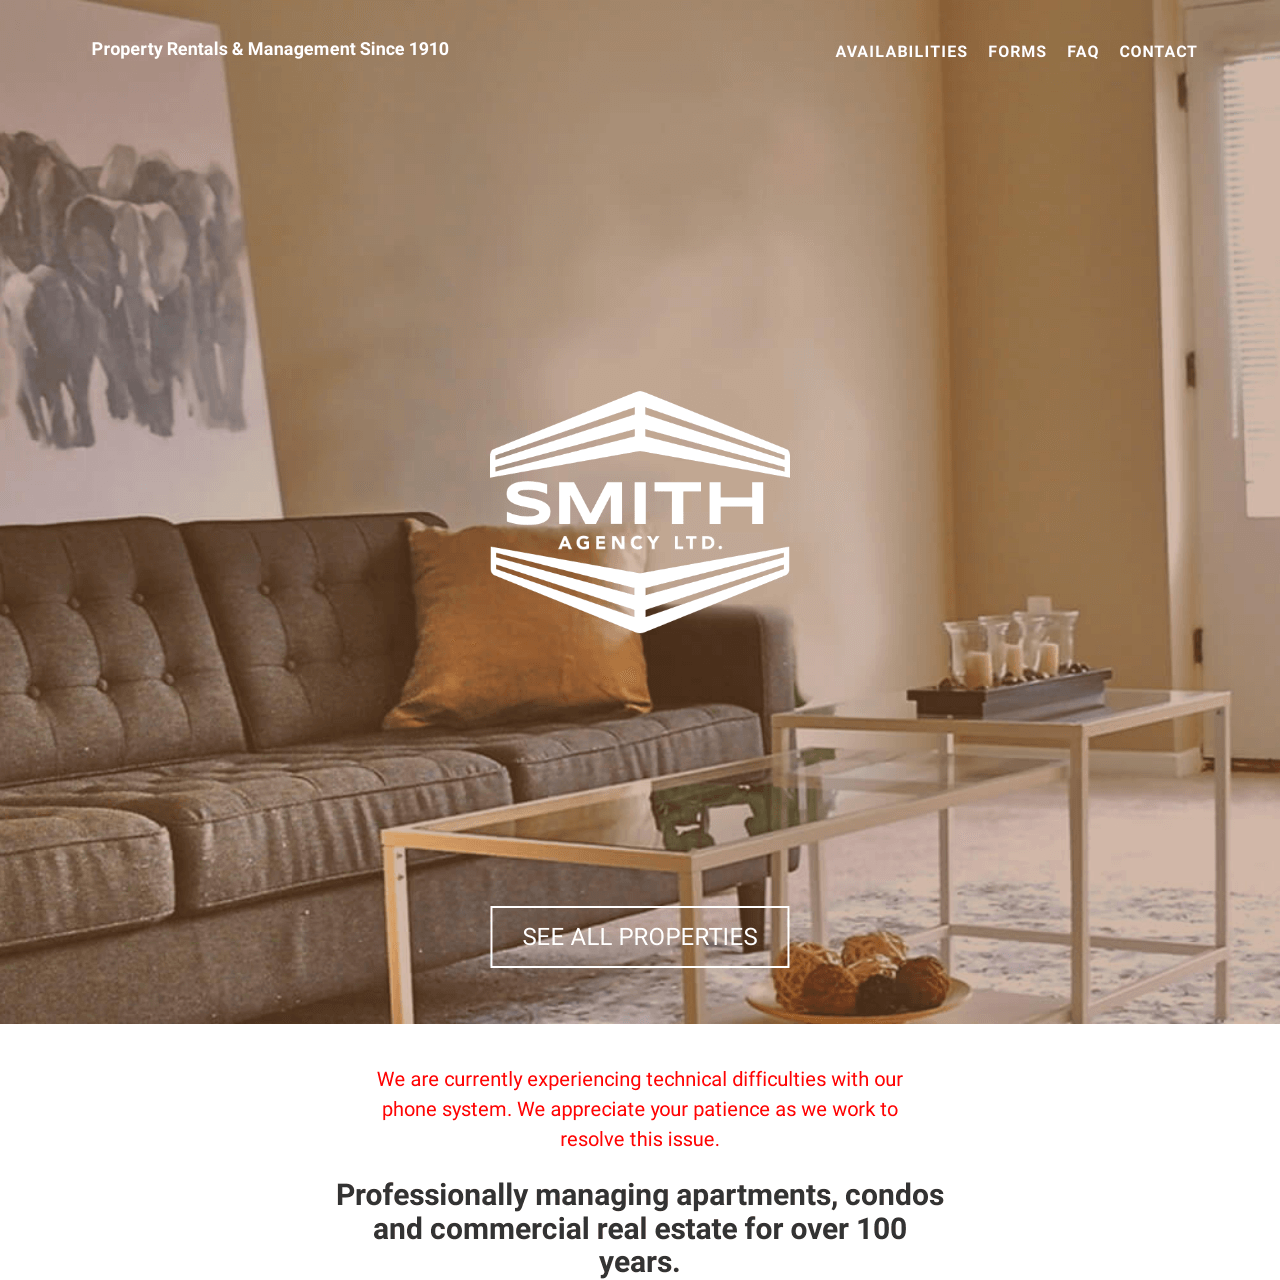 Smith Agency website designed by 6P Marketing